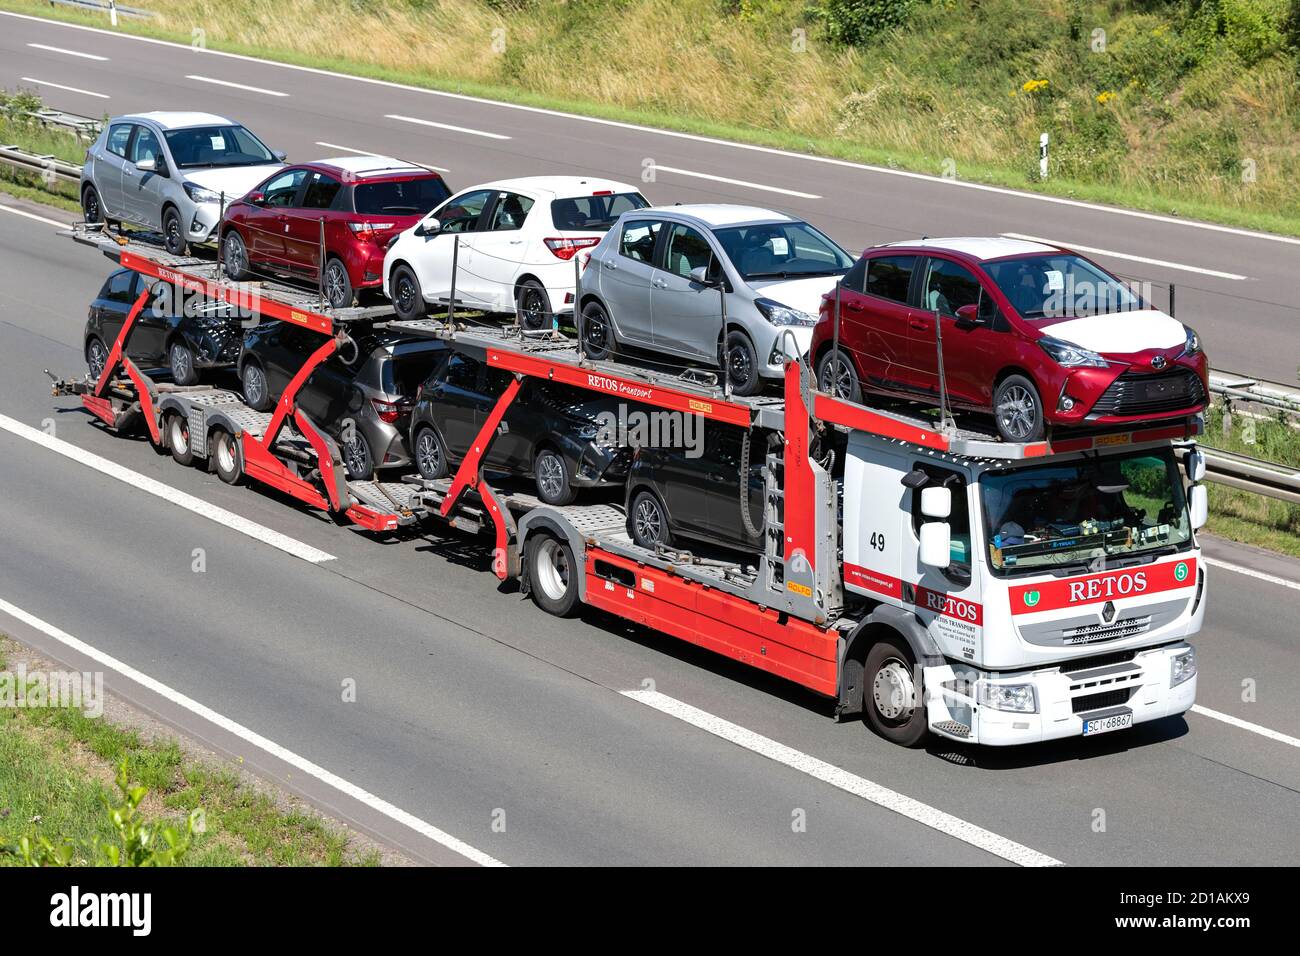 Retos Renault car-carrying truck on motorway. Stock Photo